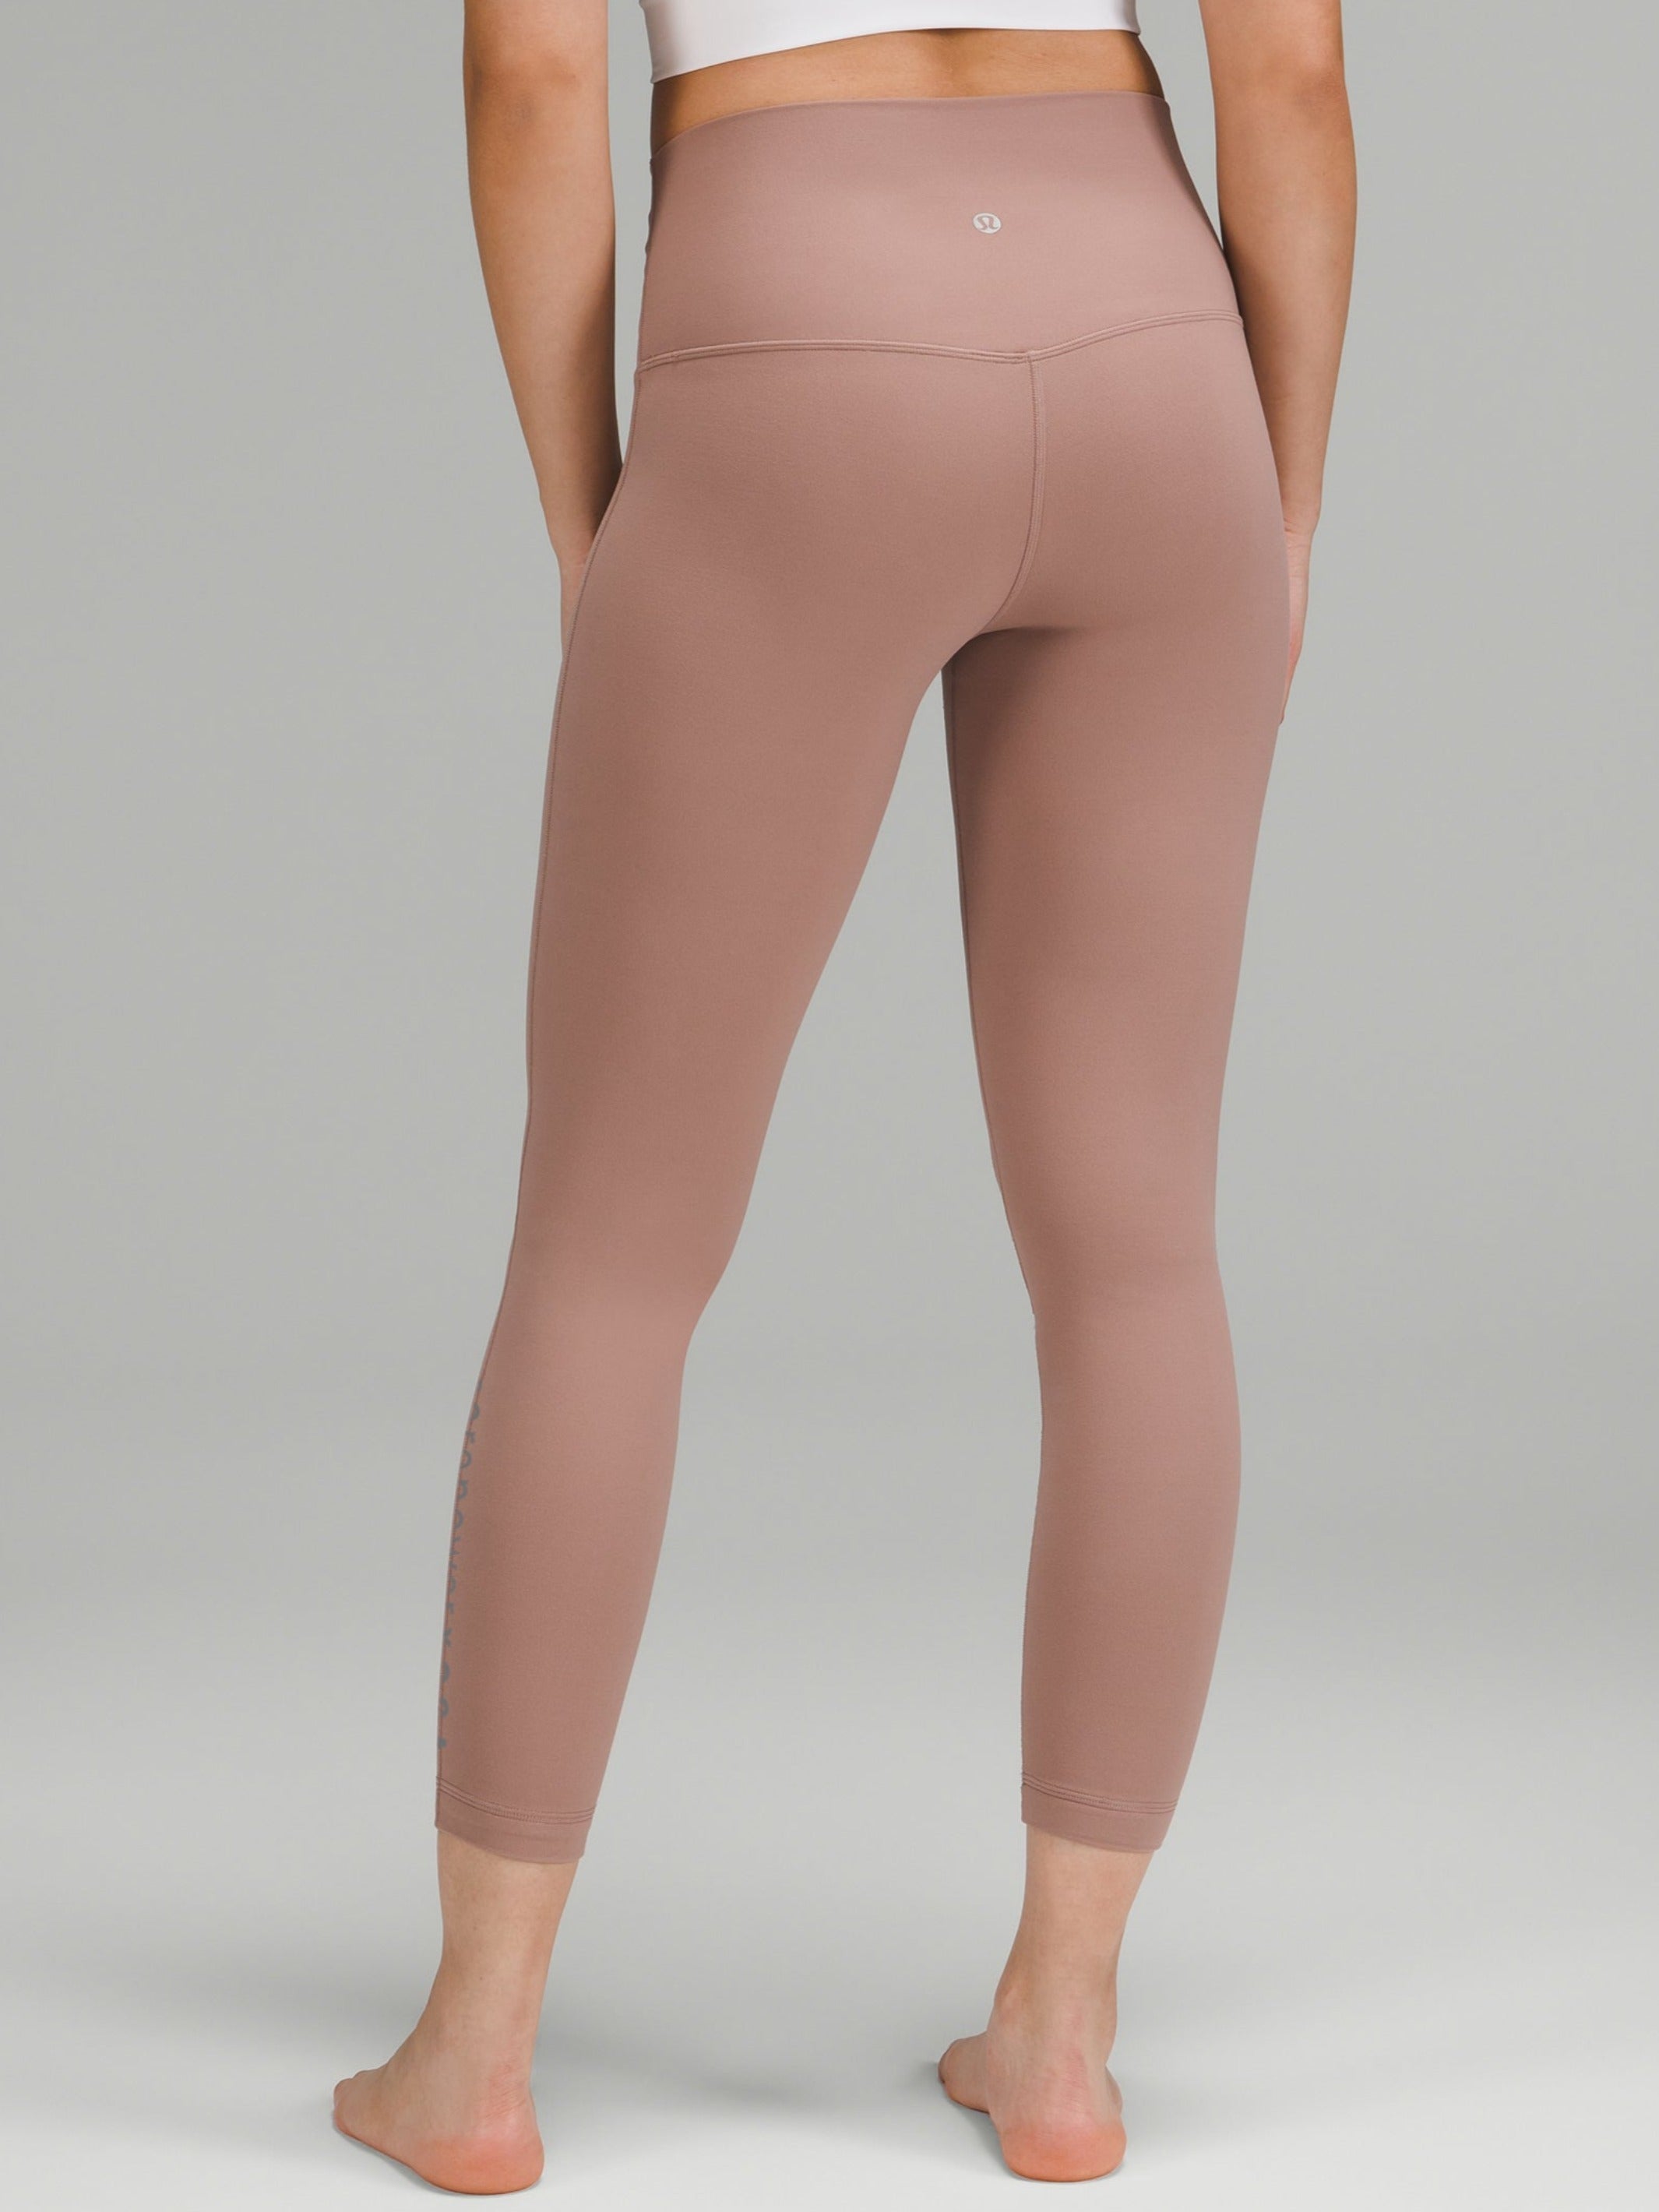 Lululemon Align Pant 7/8 Yoga Pants 